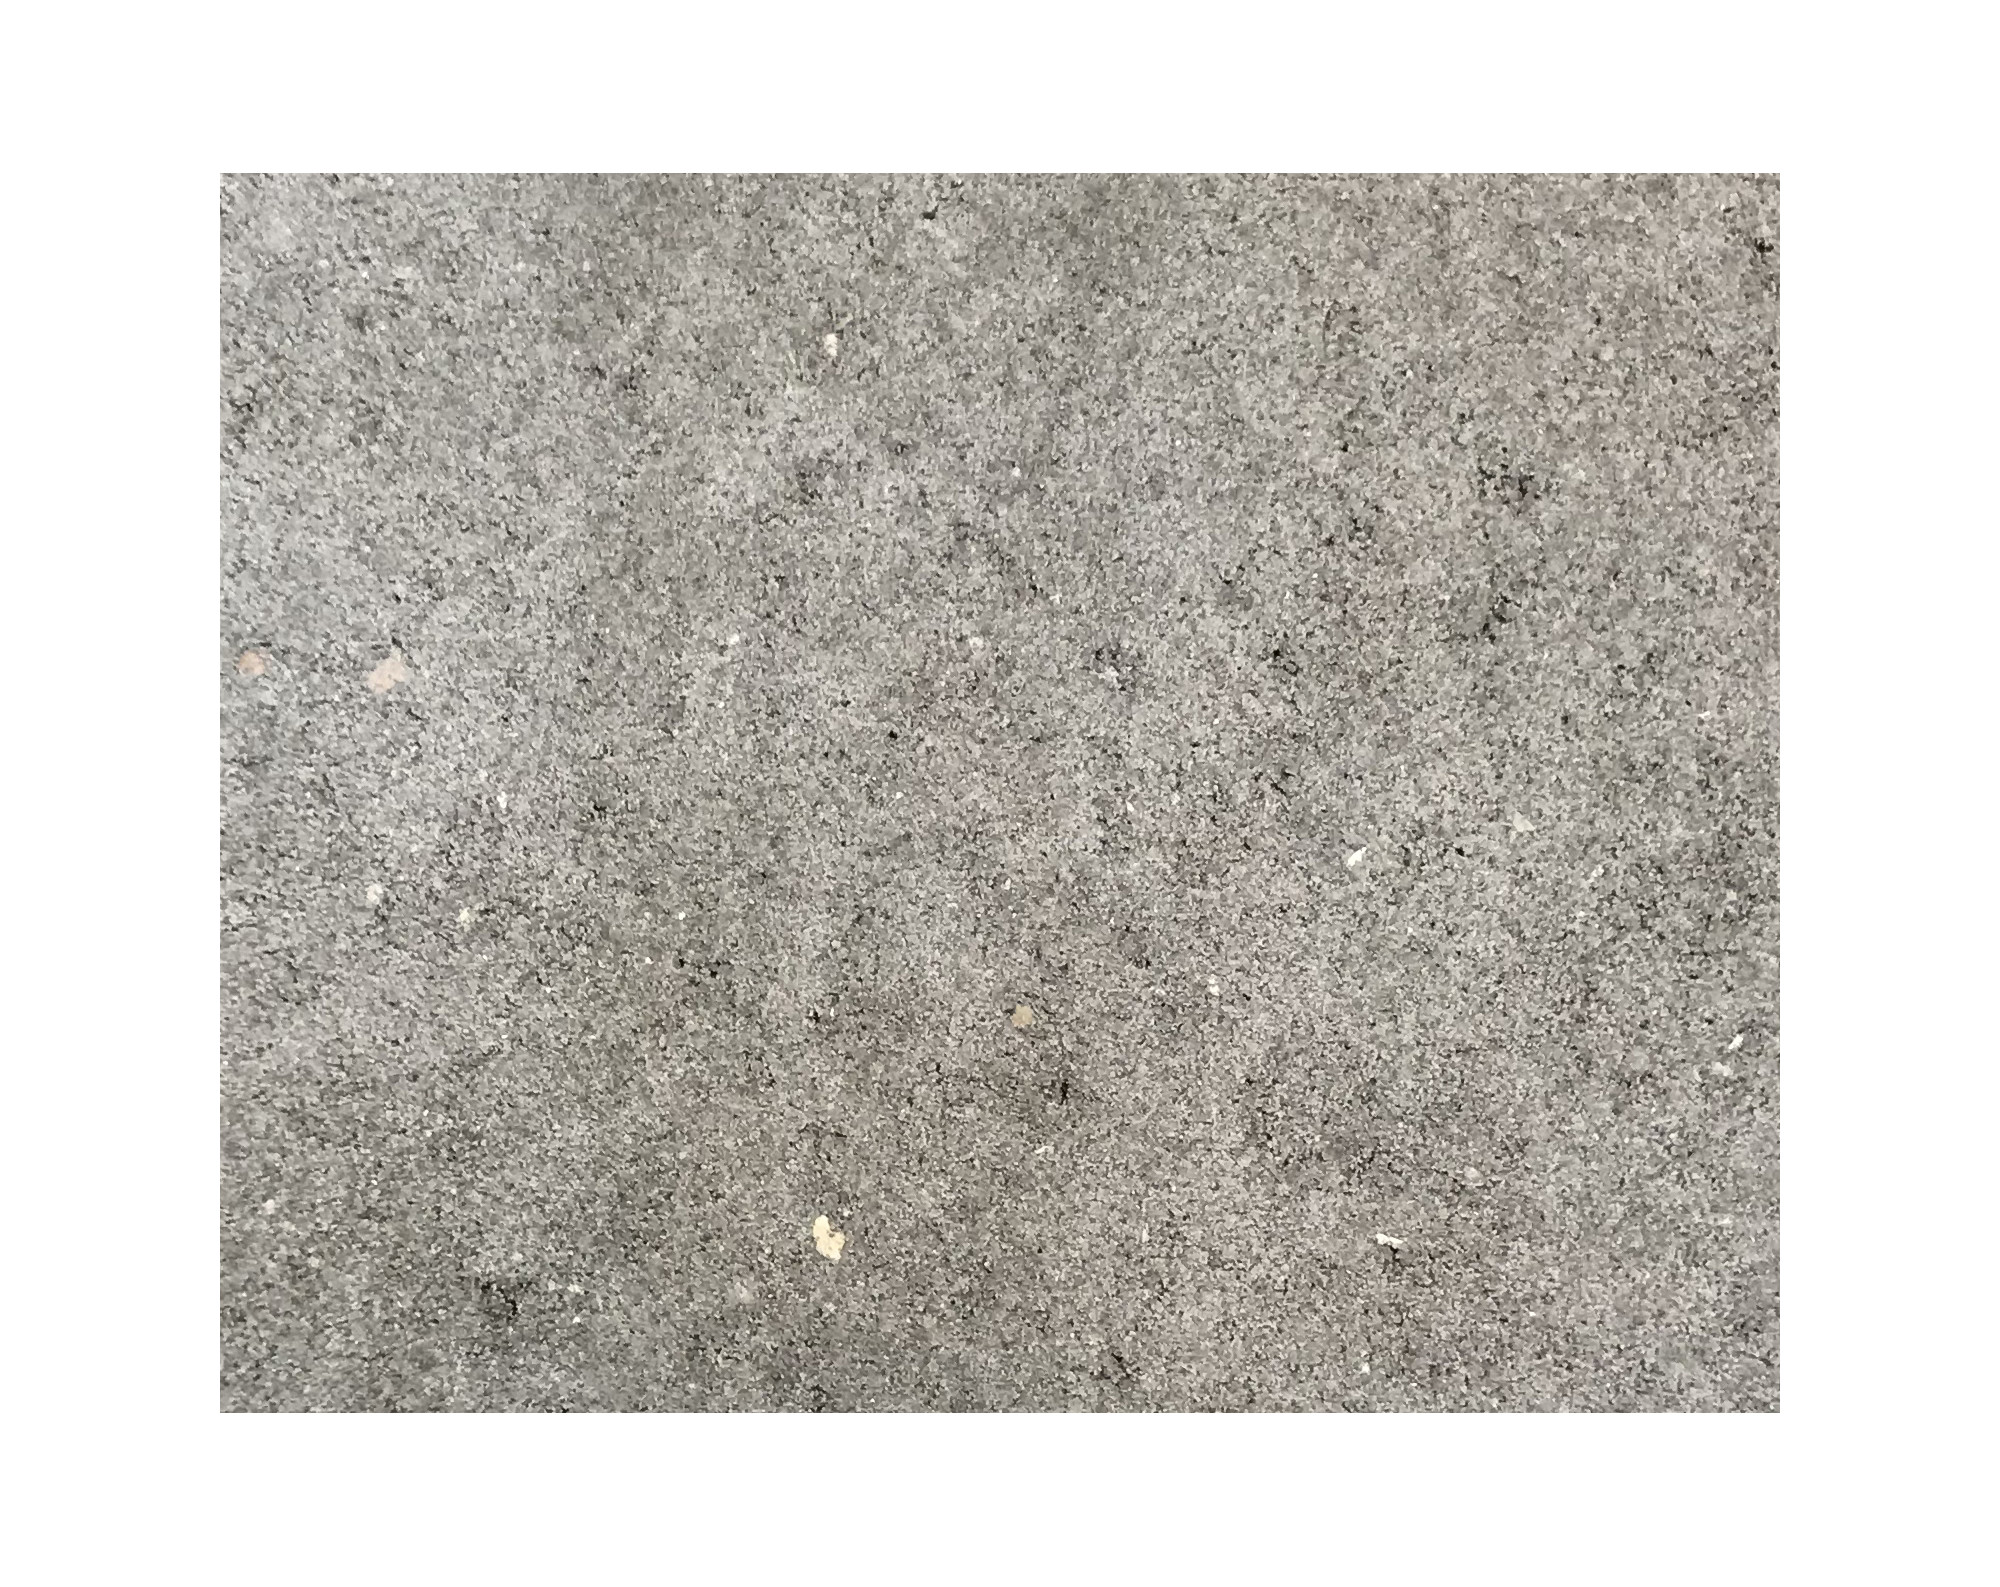 Harmo roc nevadaset, rustica-serie, rond d:6,00m, grijs, beton